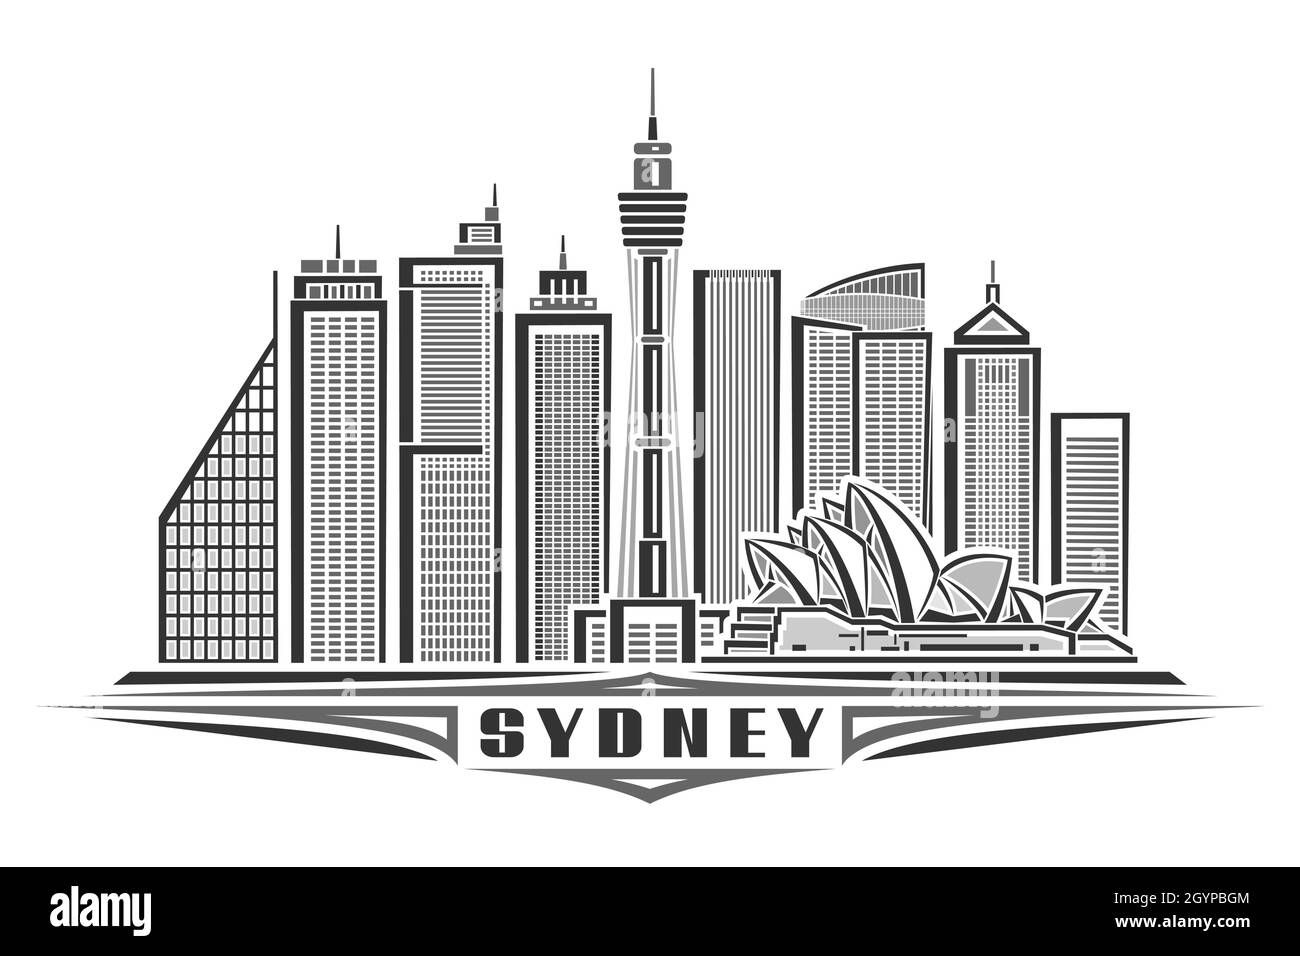 Vector illustration of Sydney, monochrome horizontal poster with linear design famous sydney city scape, urban line art concept with unique decorative Stock Vector